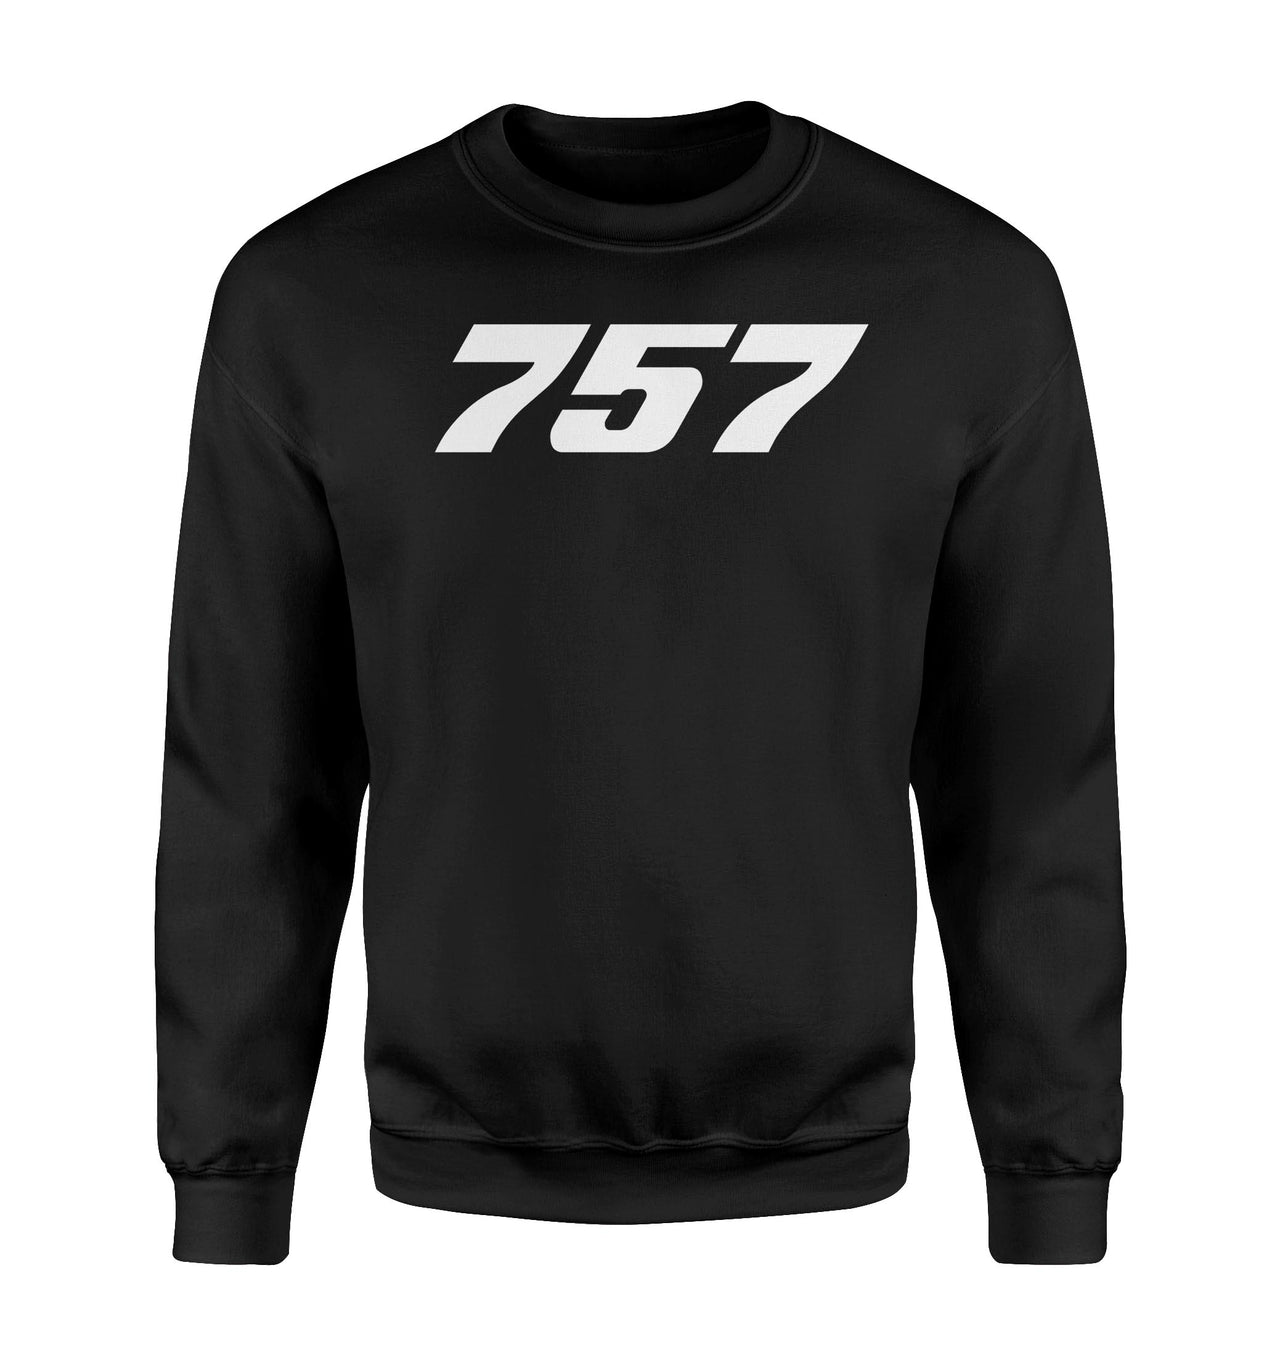 757 Flat Text Designed Sweatshirts